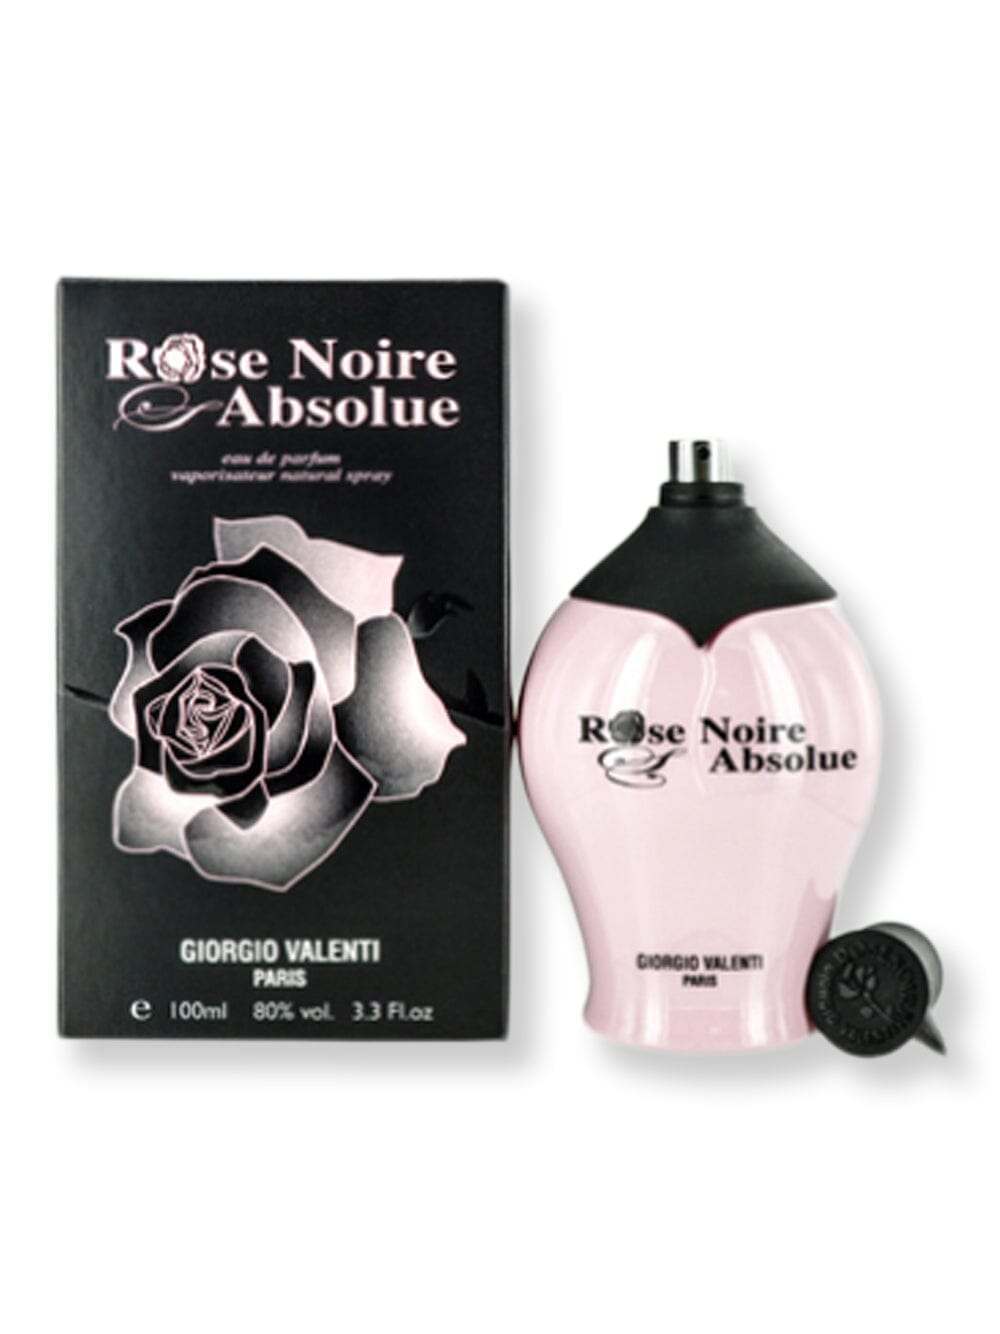 Giorgio Valenti Giorgio Valenti Rose Noire Absolue EDP Spray 3.3 oz Perfume 